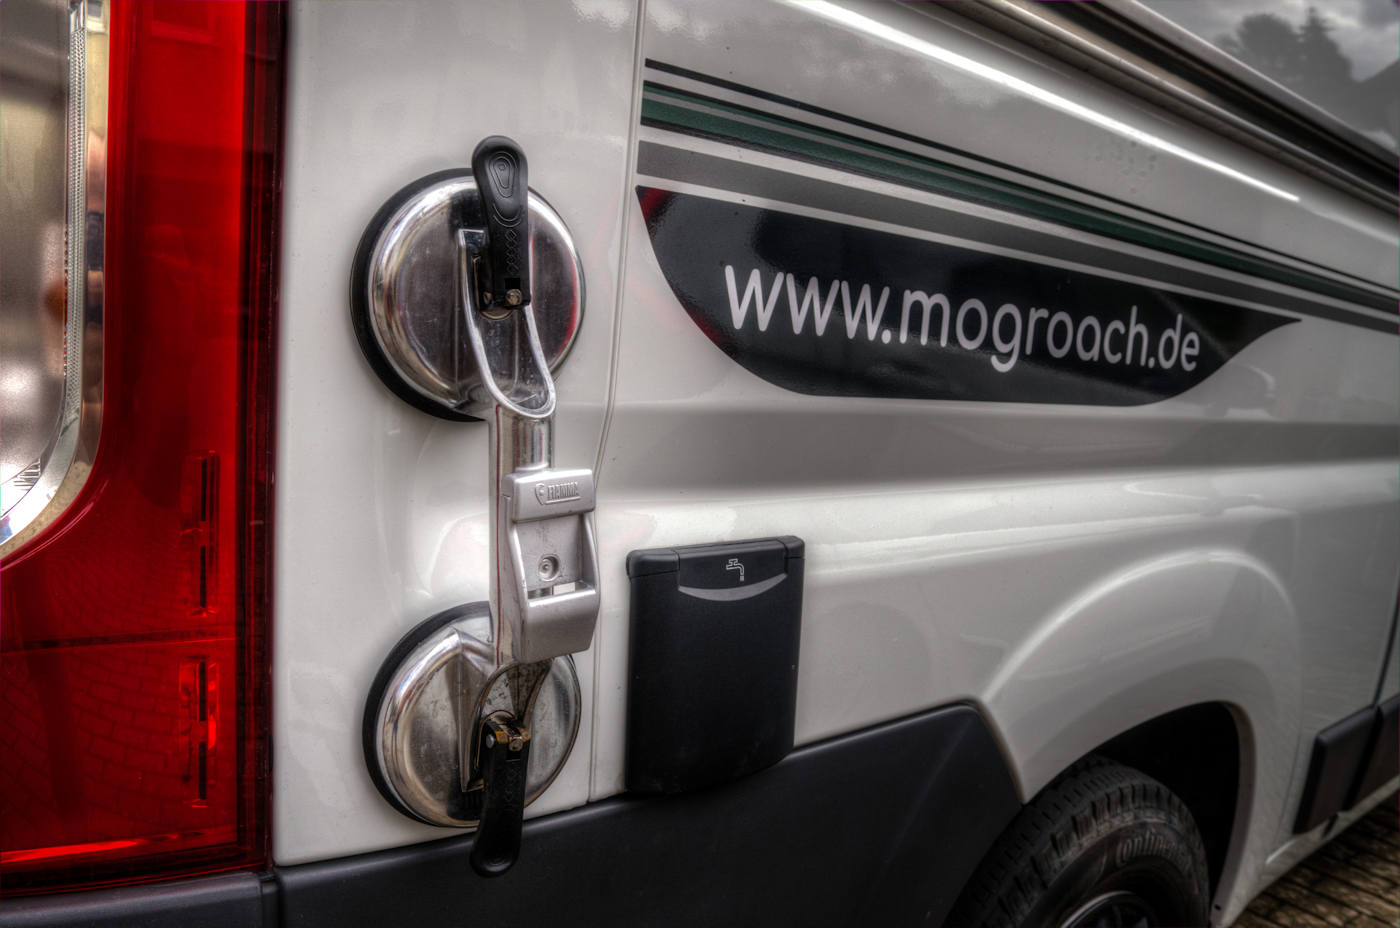 Mogroach Travelblog Saugheber Wohnmobil